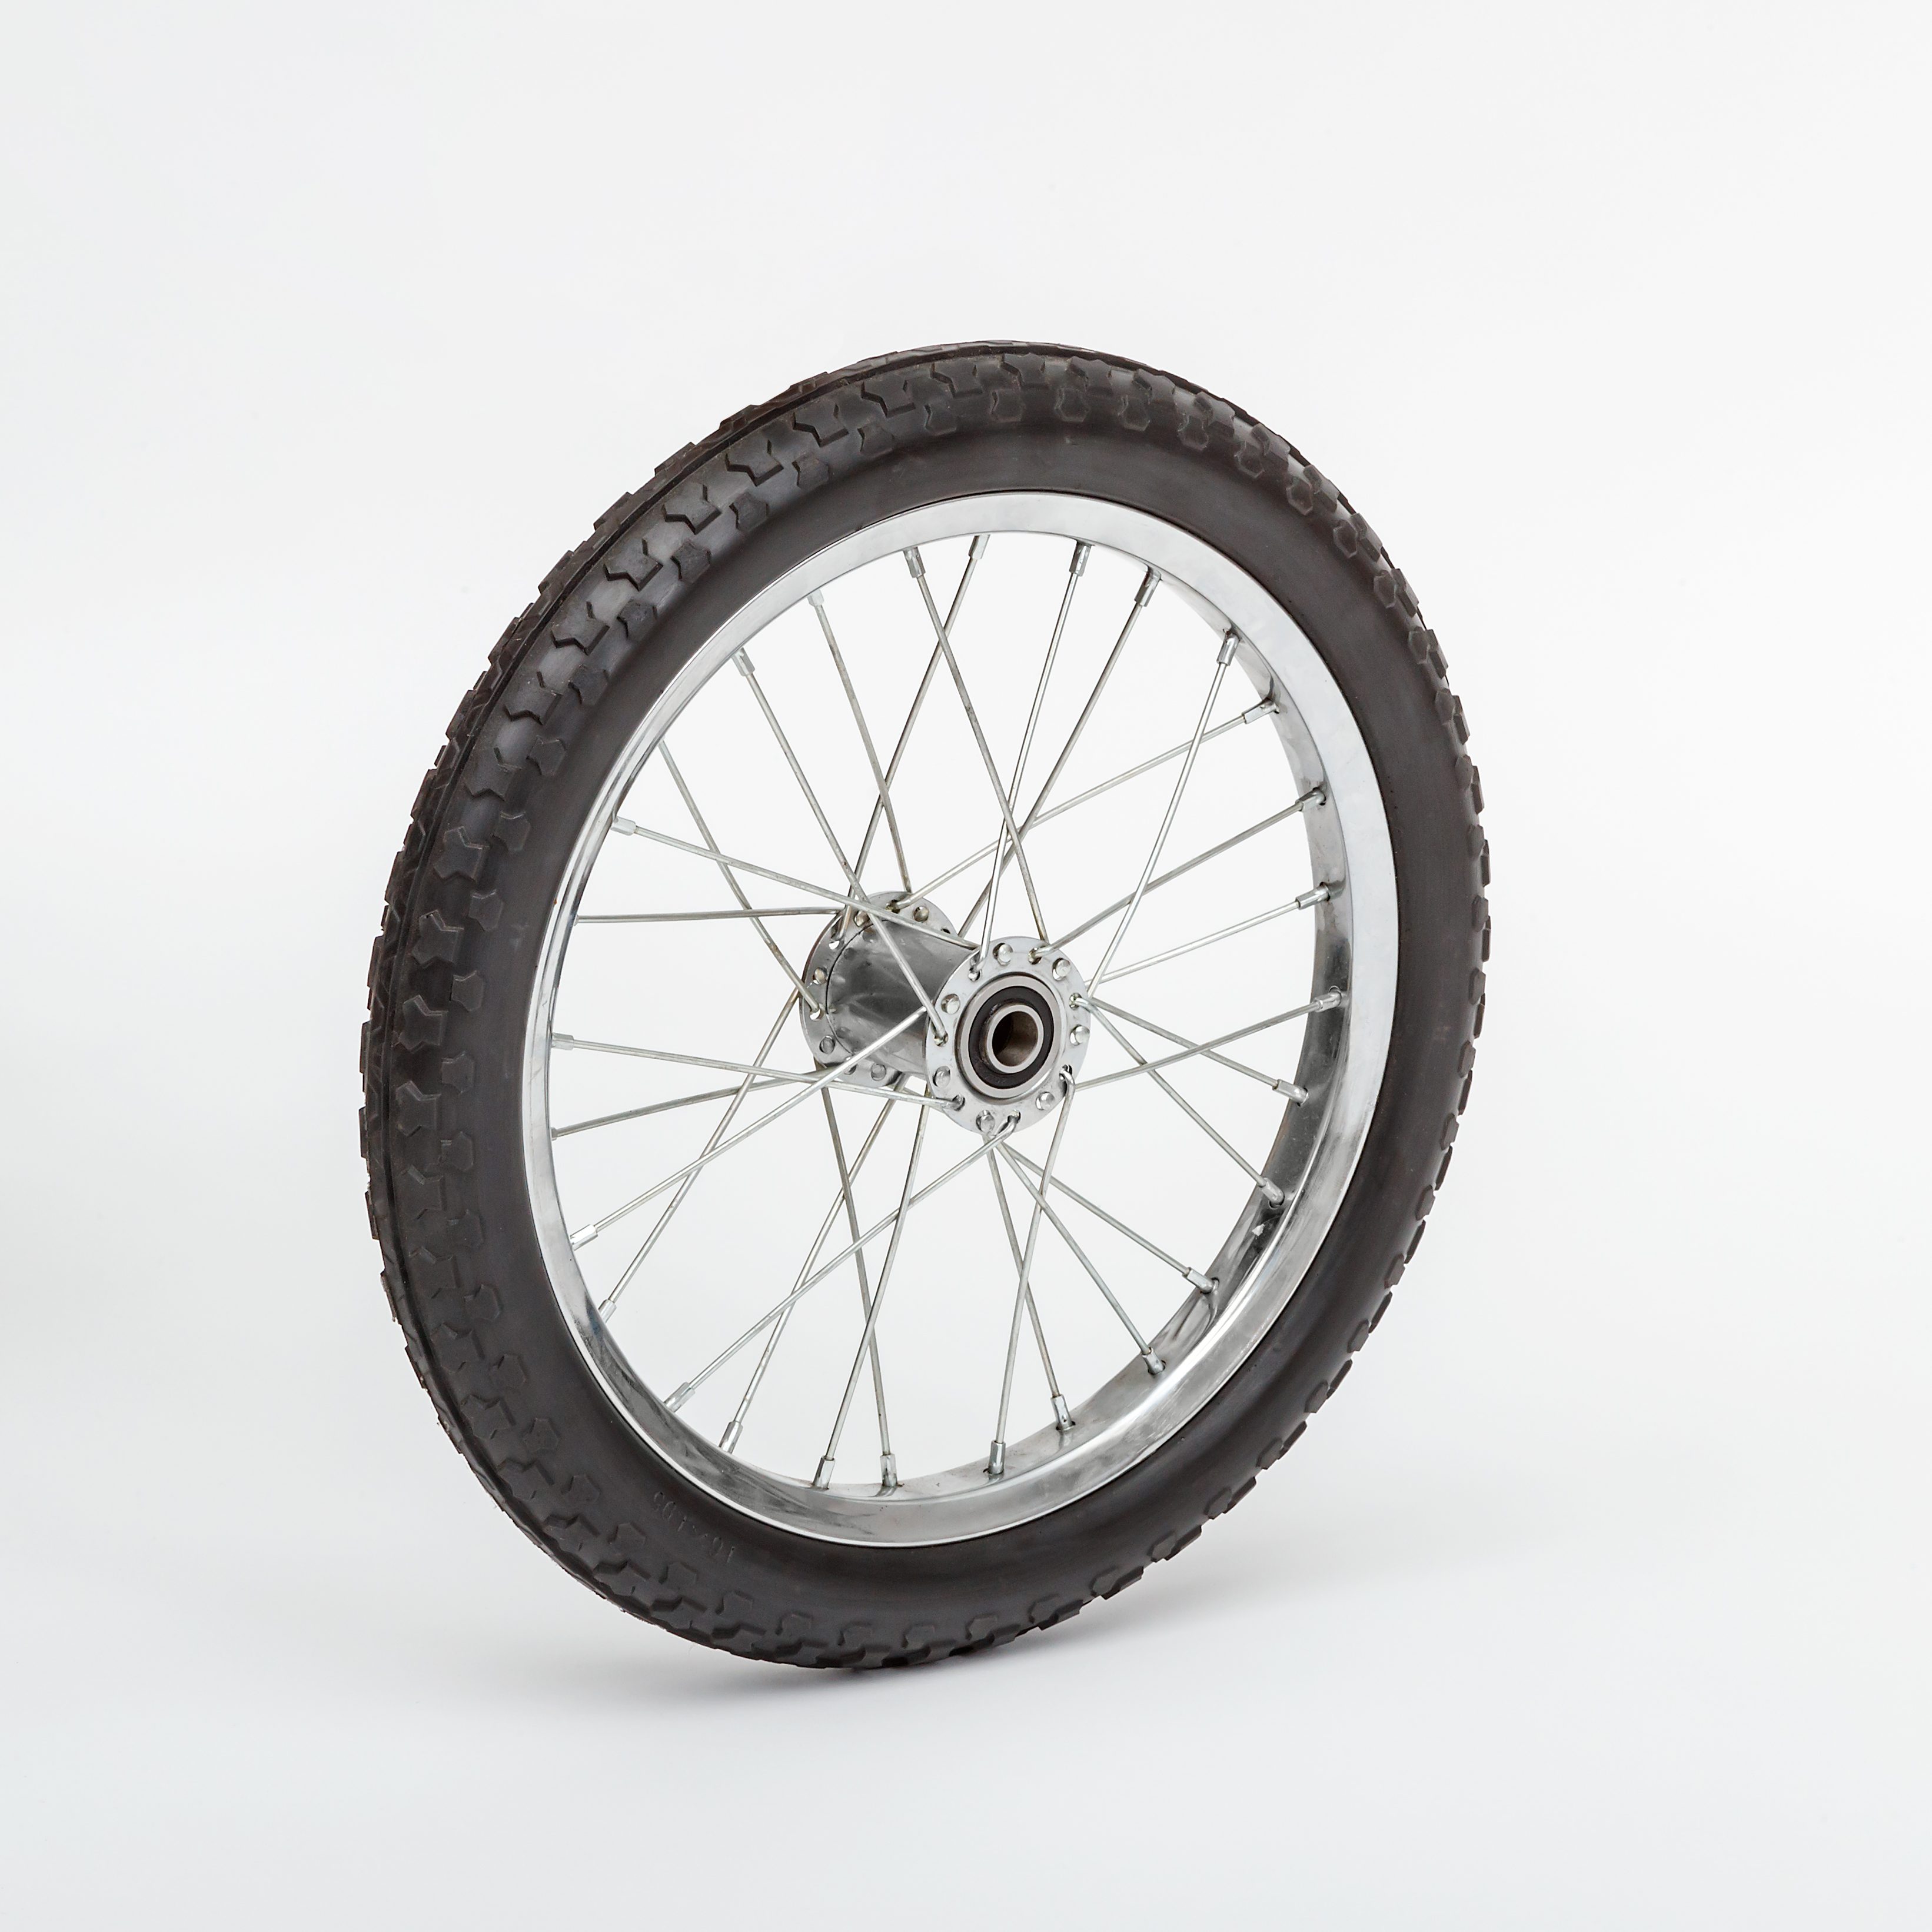 Lapp Wheels 16 To 26 Flat Free Or Pneumatic Metal Spoke Wheels